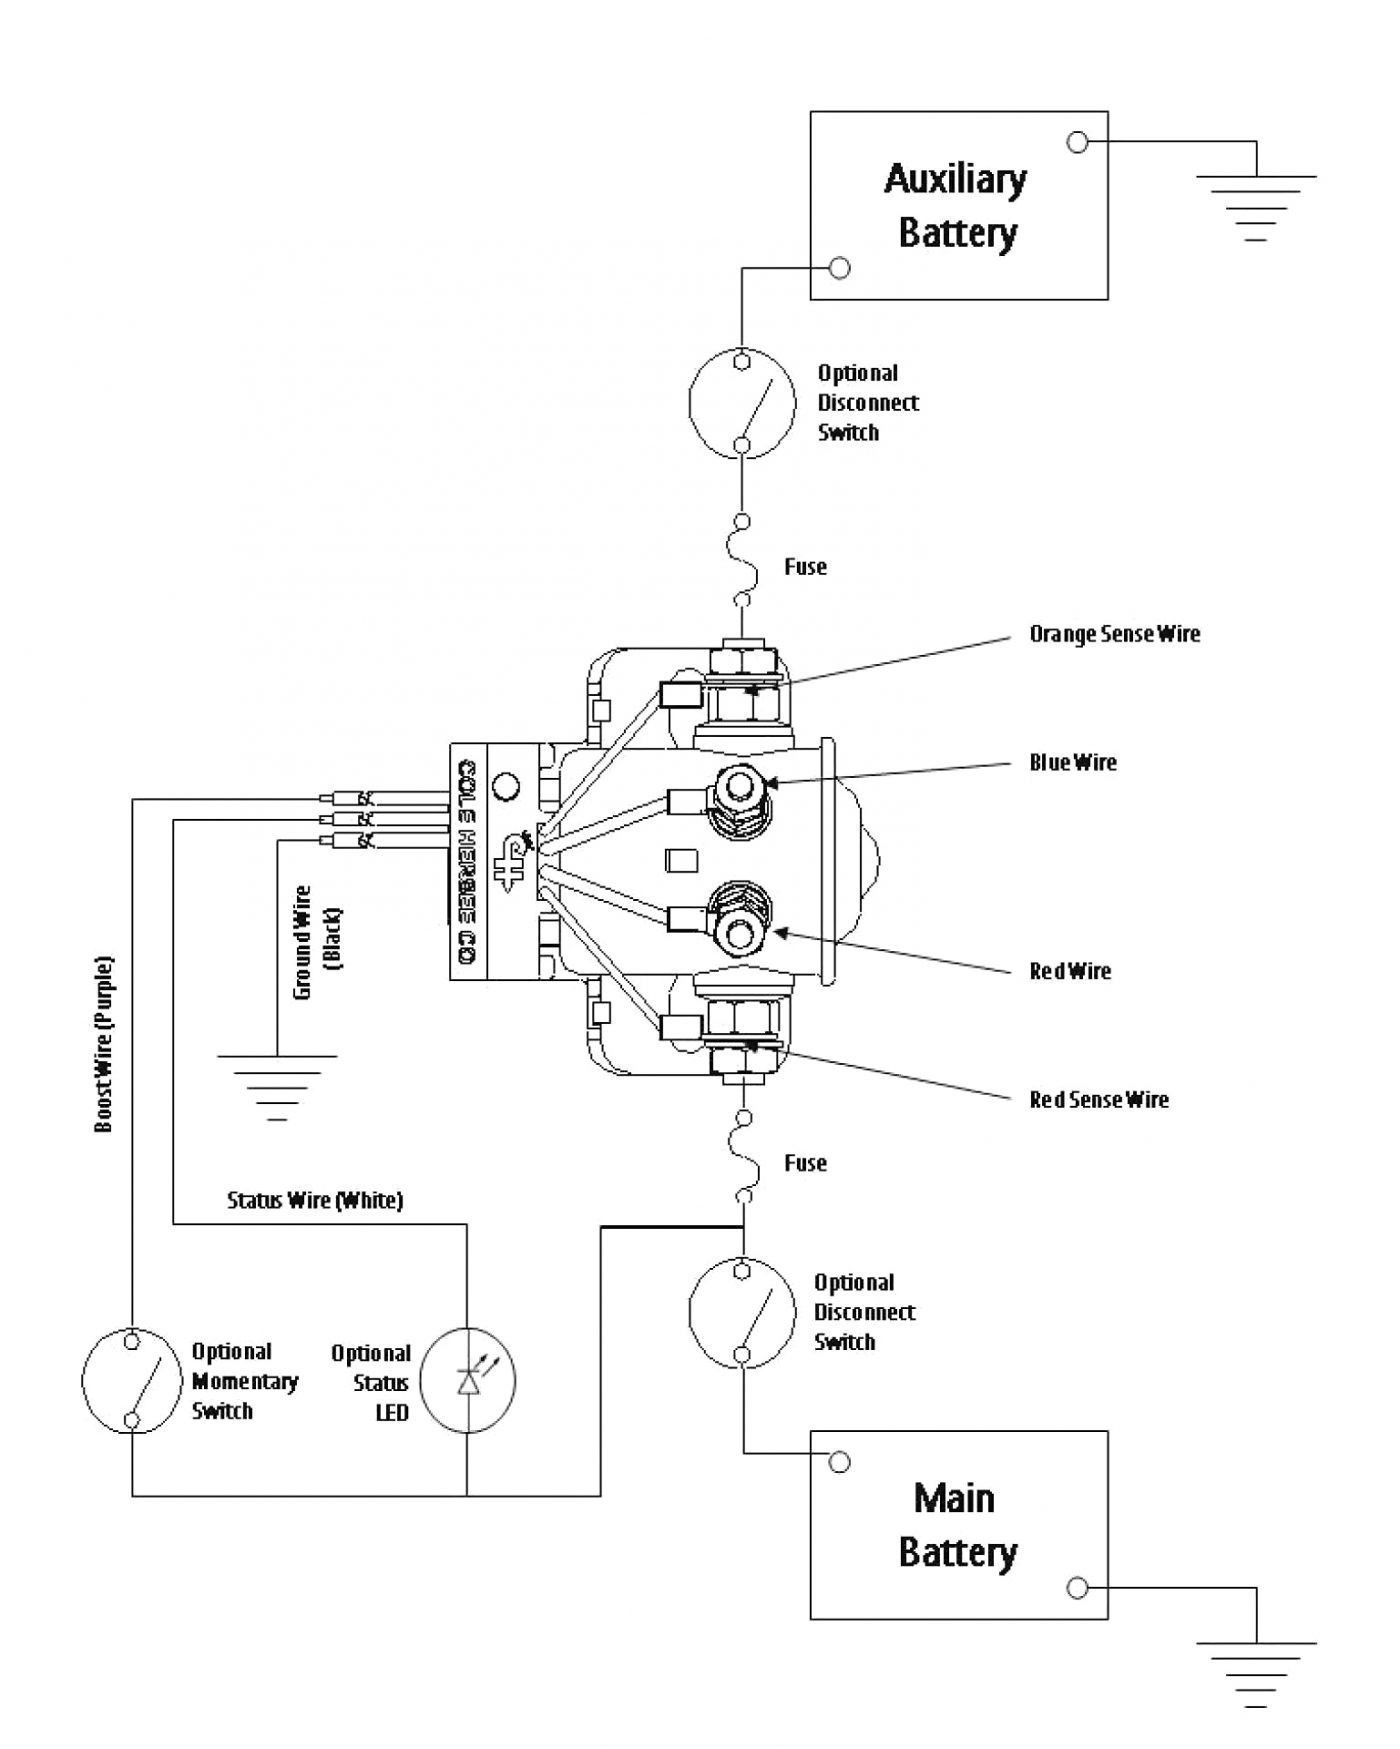 Marine Fuel Gauge Wiring Diagram Reference Battery Isolator Wiring Diagram Along With Fuel Gauge Wiring Diagram